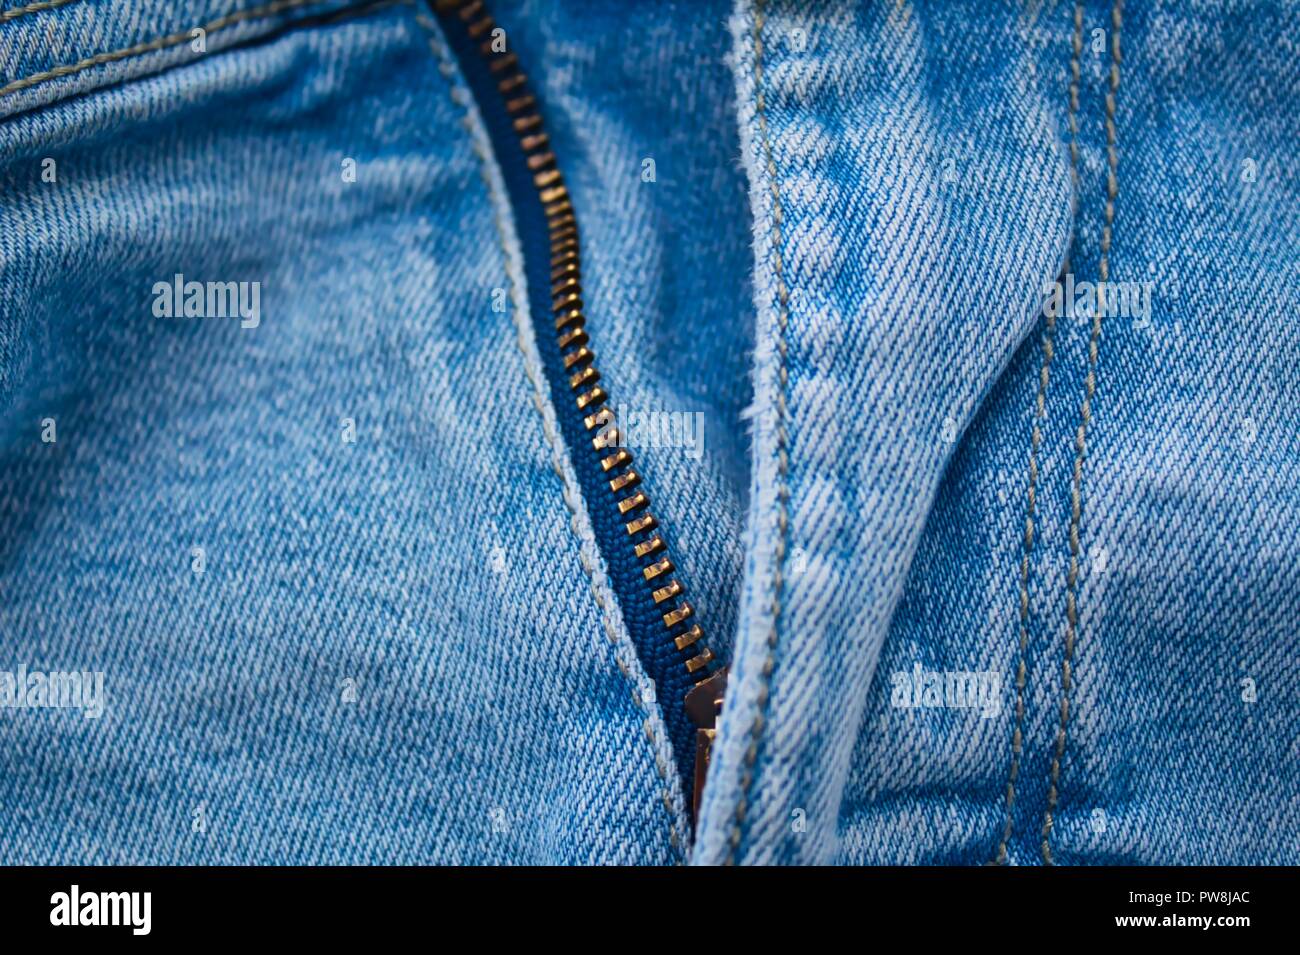 Pants Unzipped Stock Photos & Pants Unzipped Stock Images - Alamy